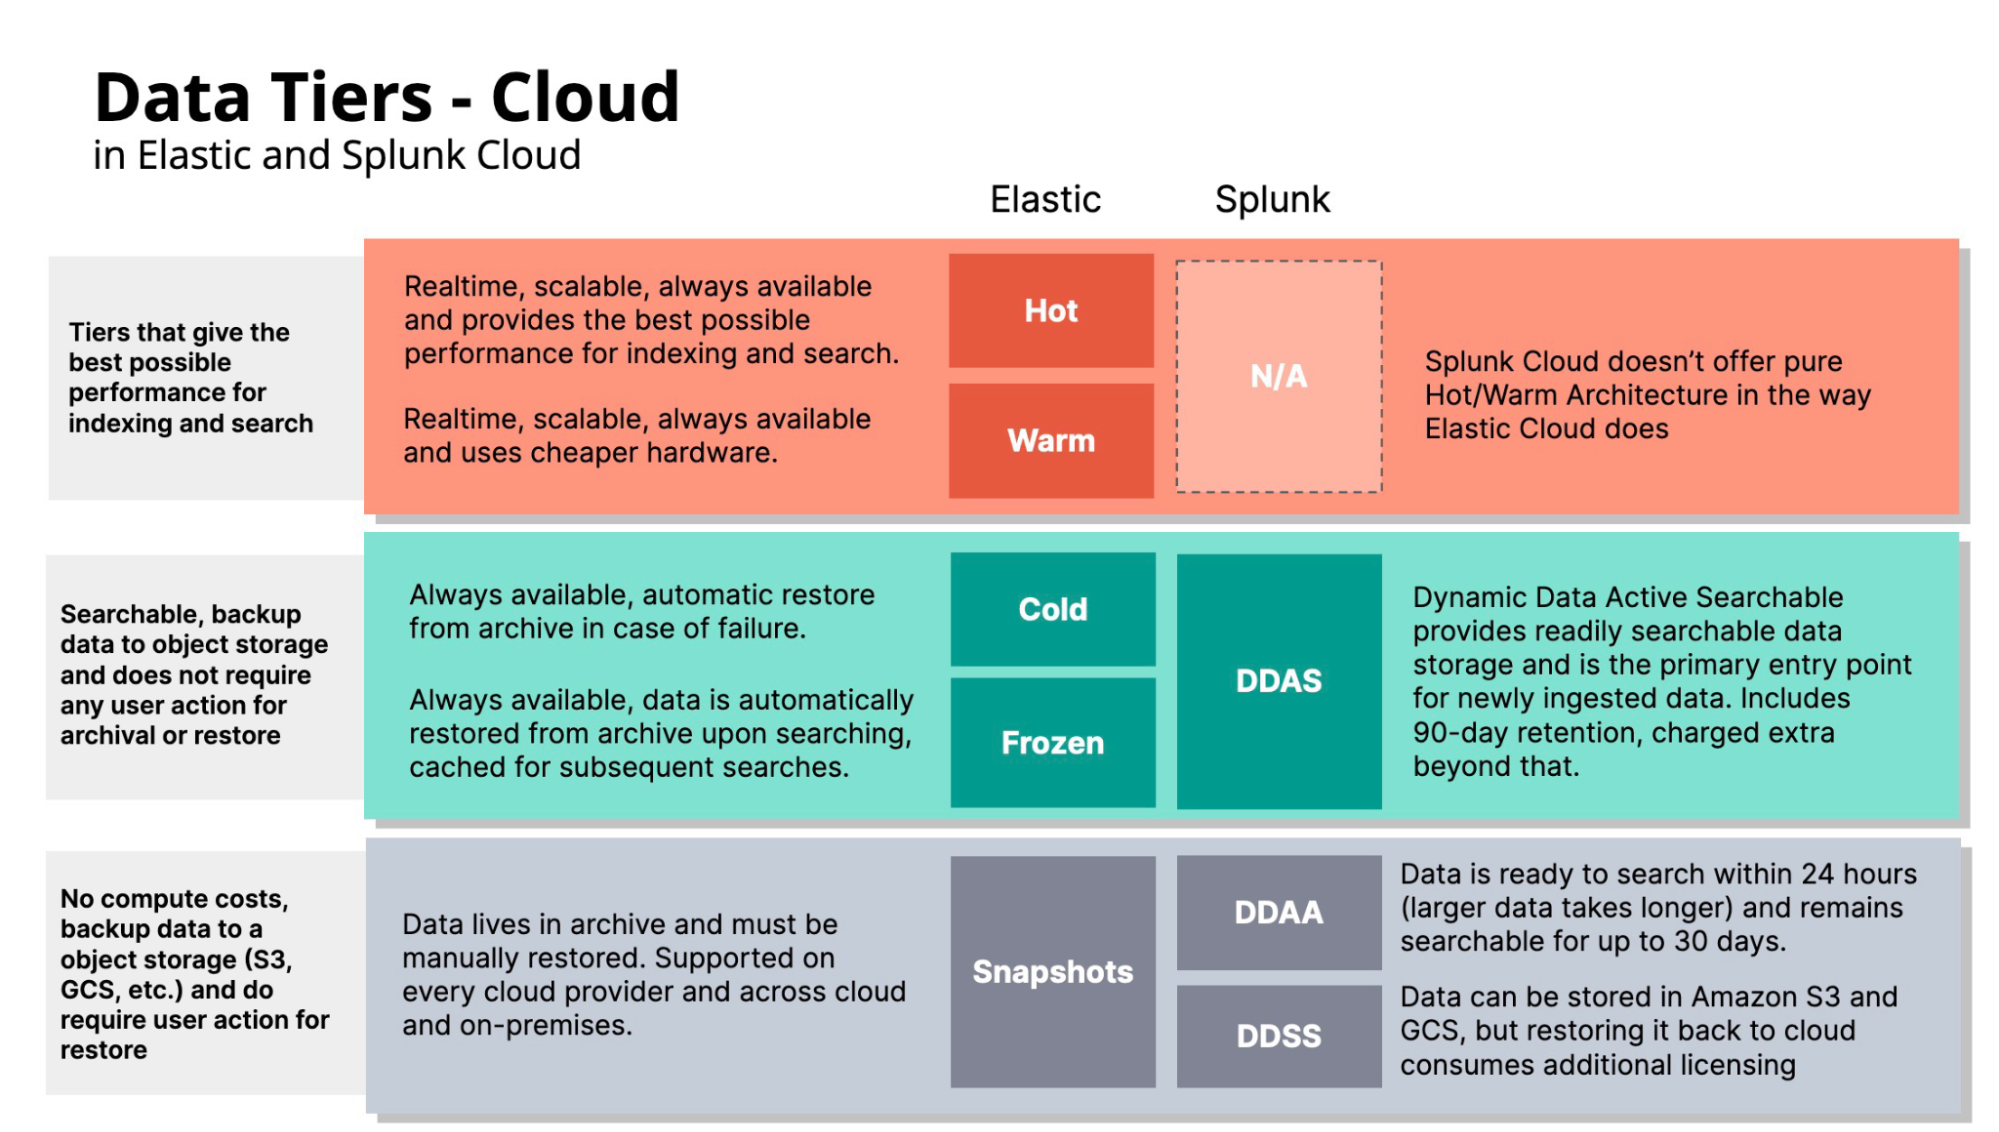 Data Tiers - Cloud in Elastic and Splunk Cloud